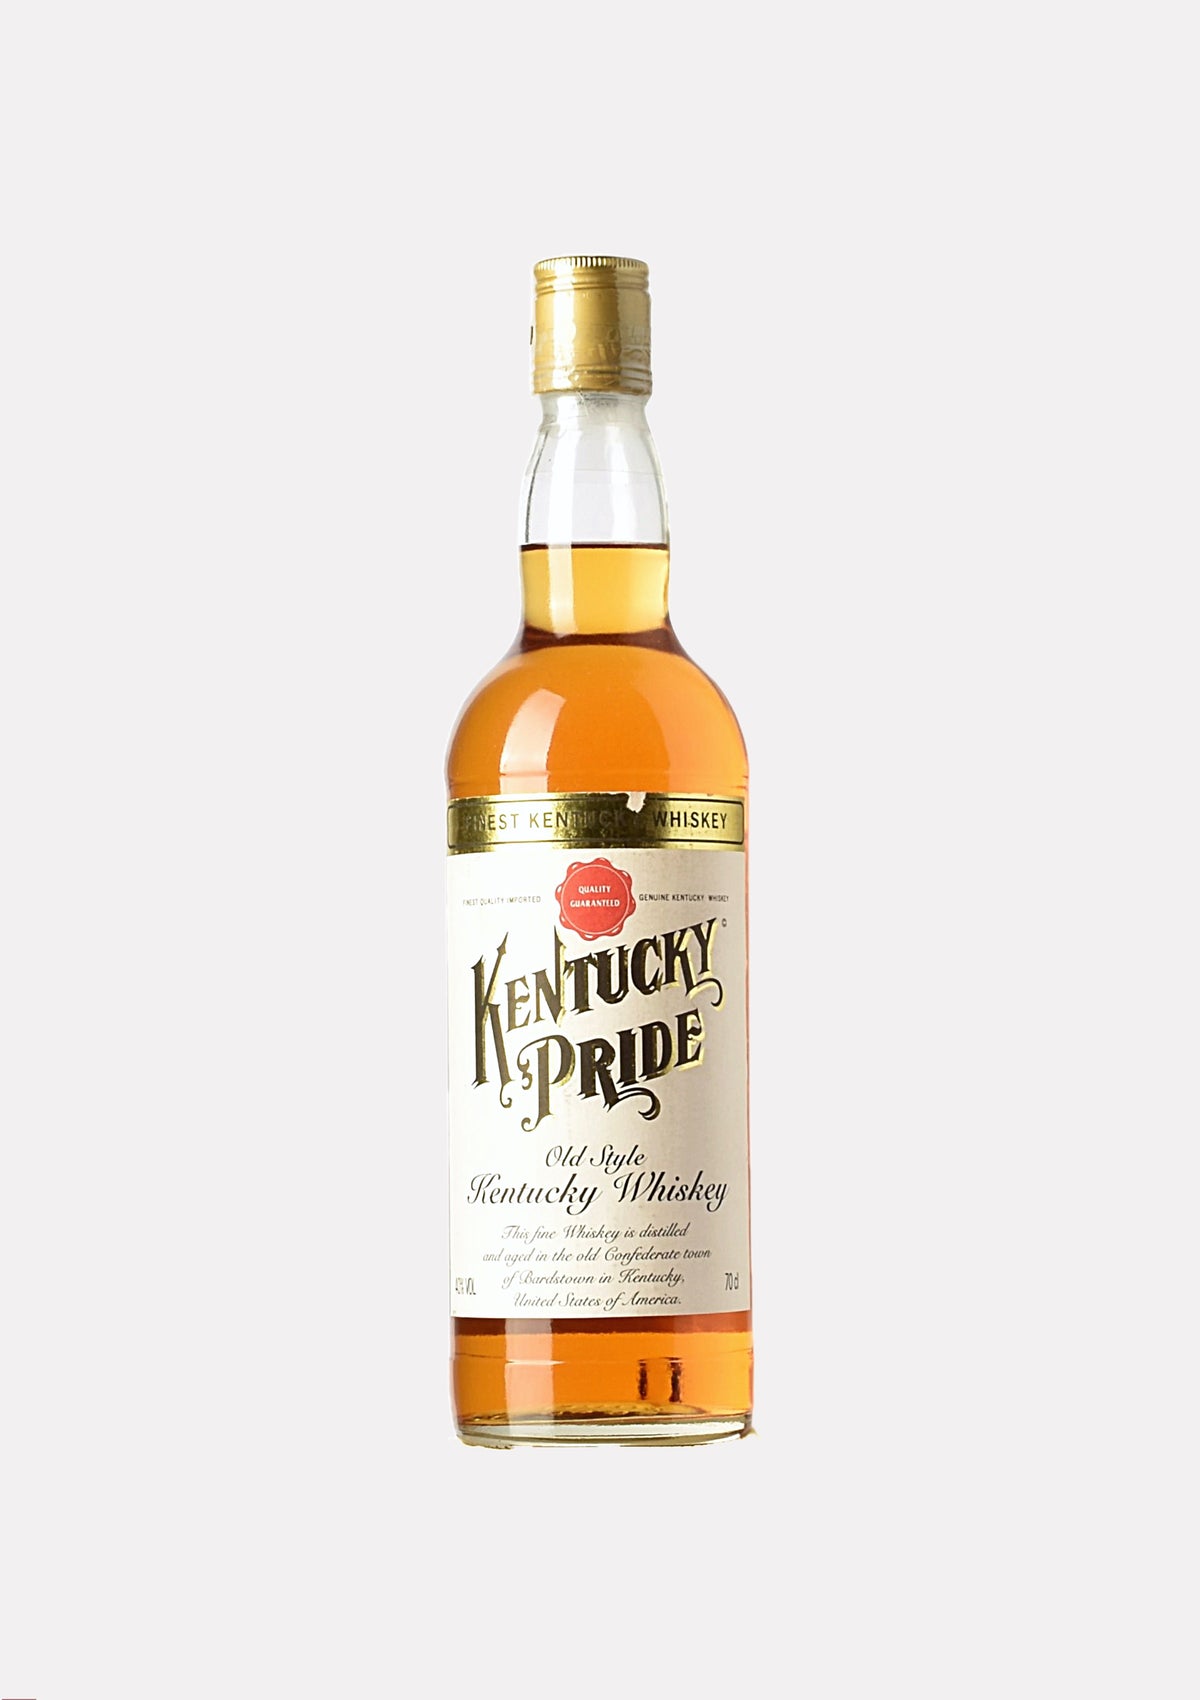 Kentucky Pride Old Style Kentucky Whiskey